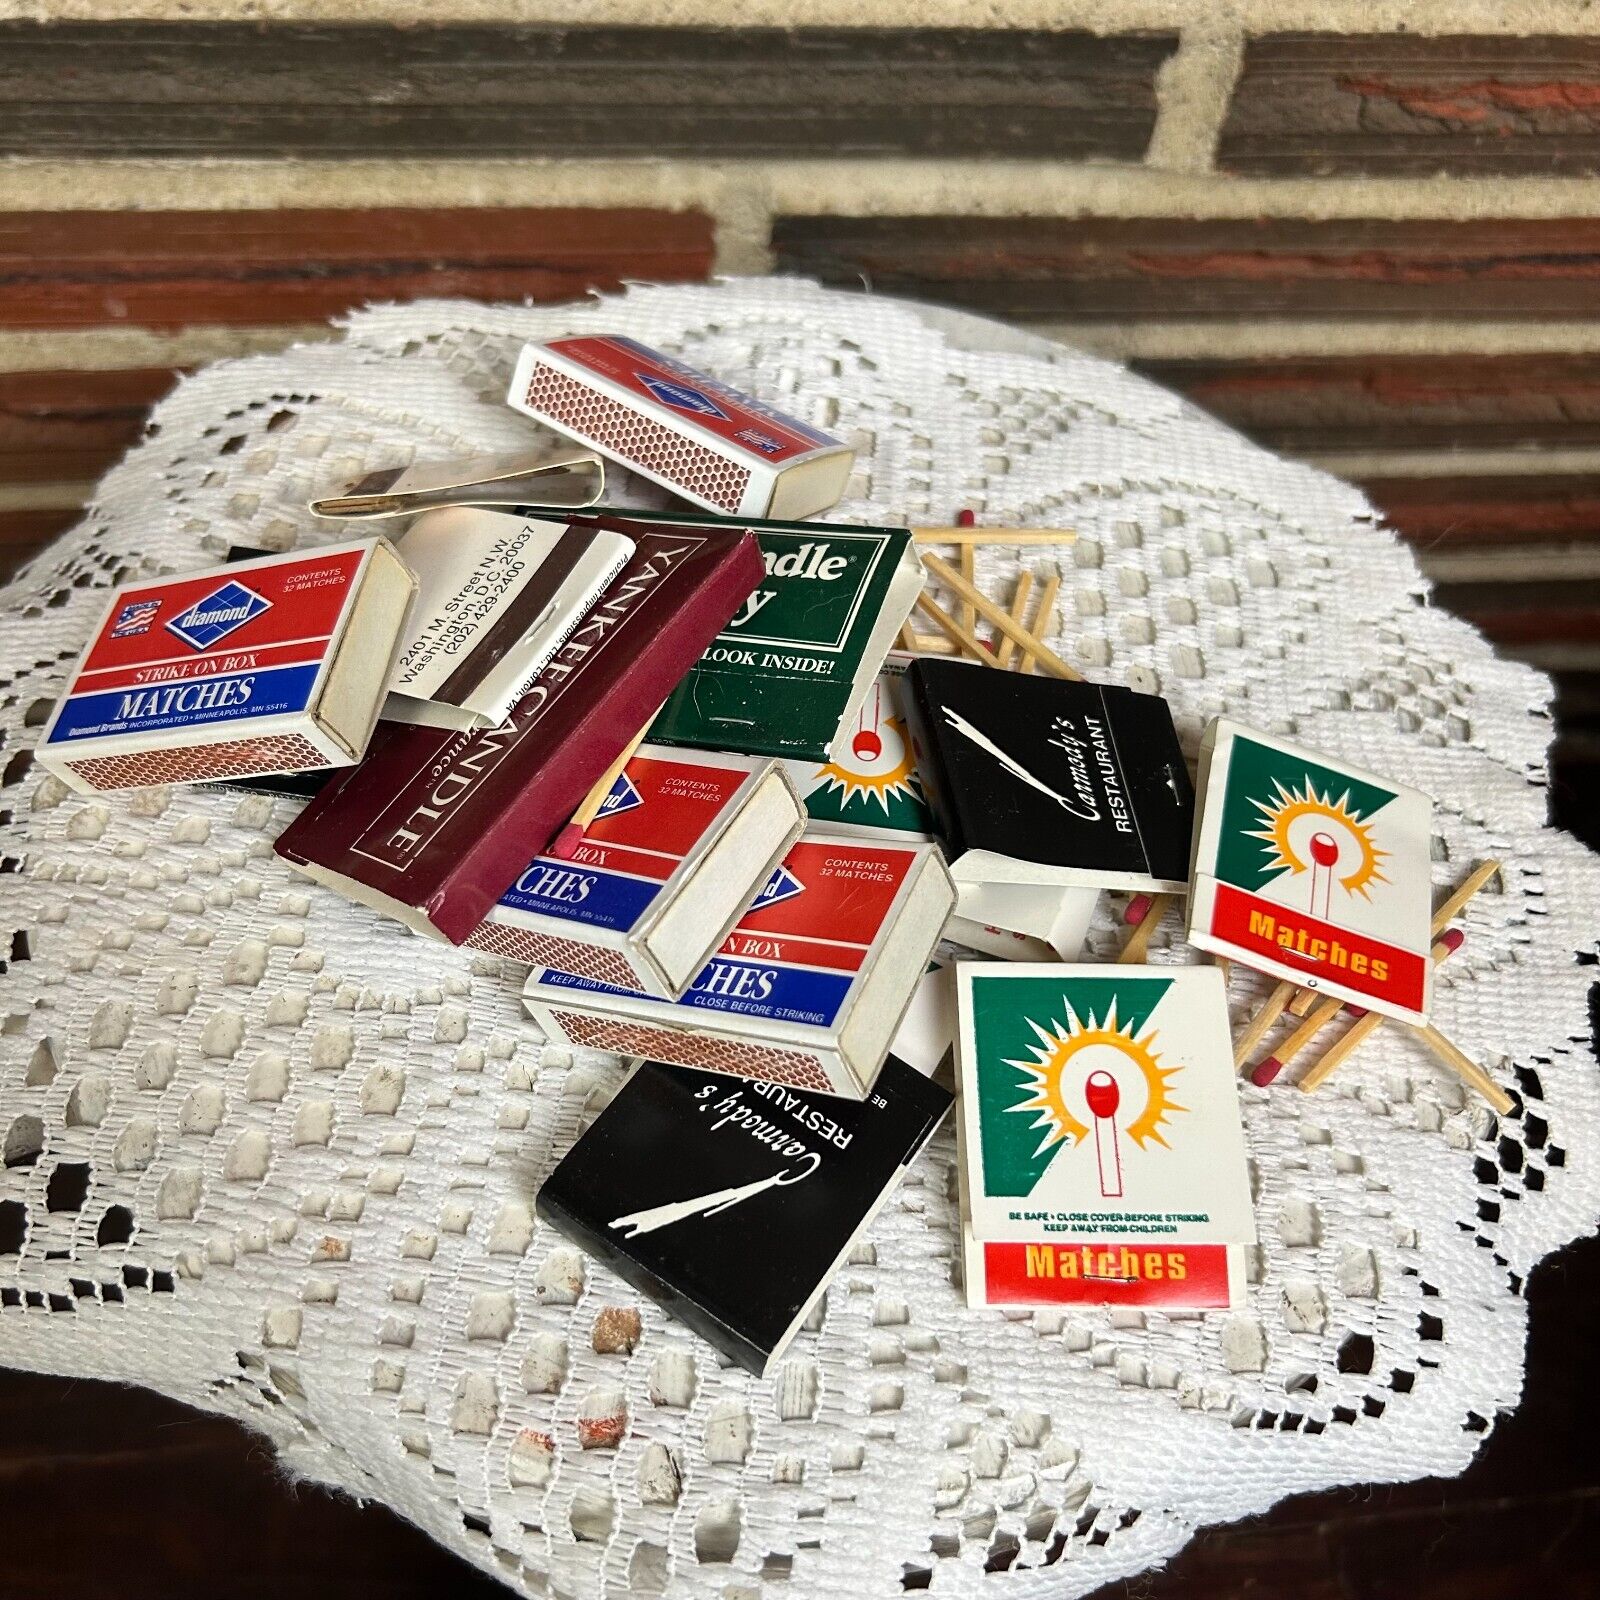 Vintage Lot Of Matches Matchbooks Retro Hotel 7/11 Restaurant Camel King Edward